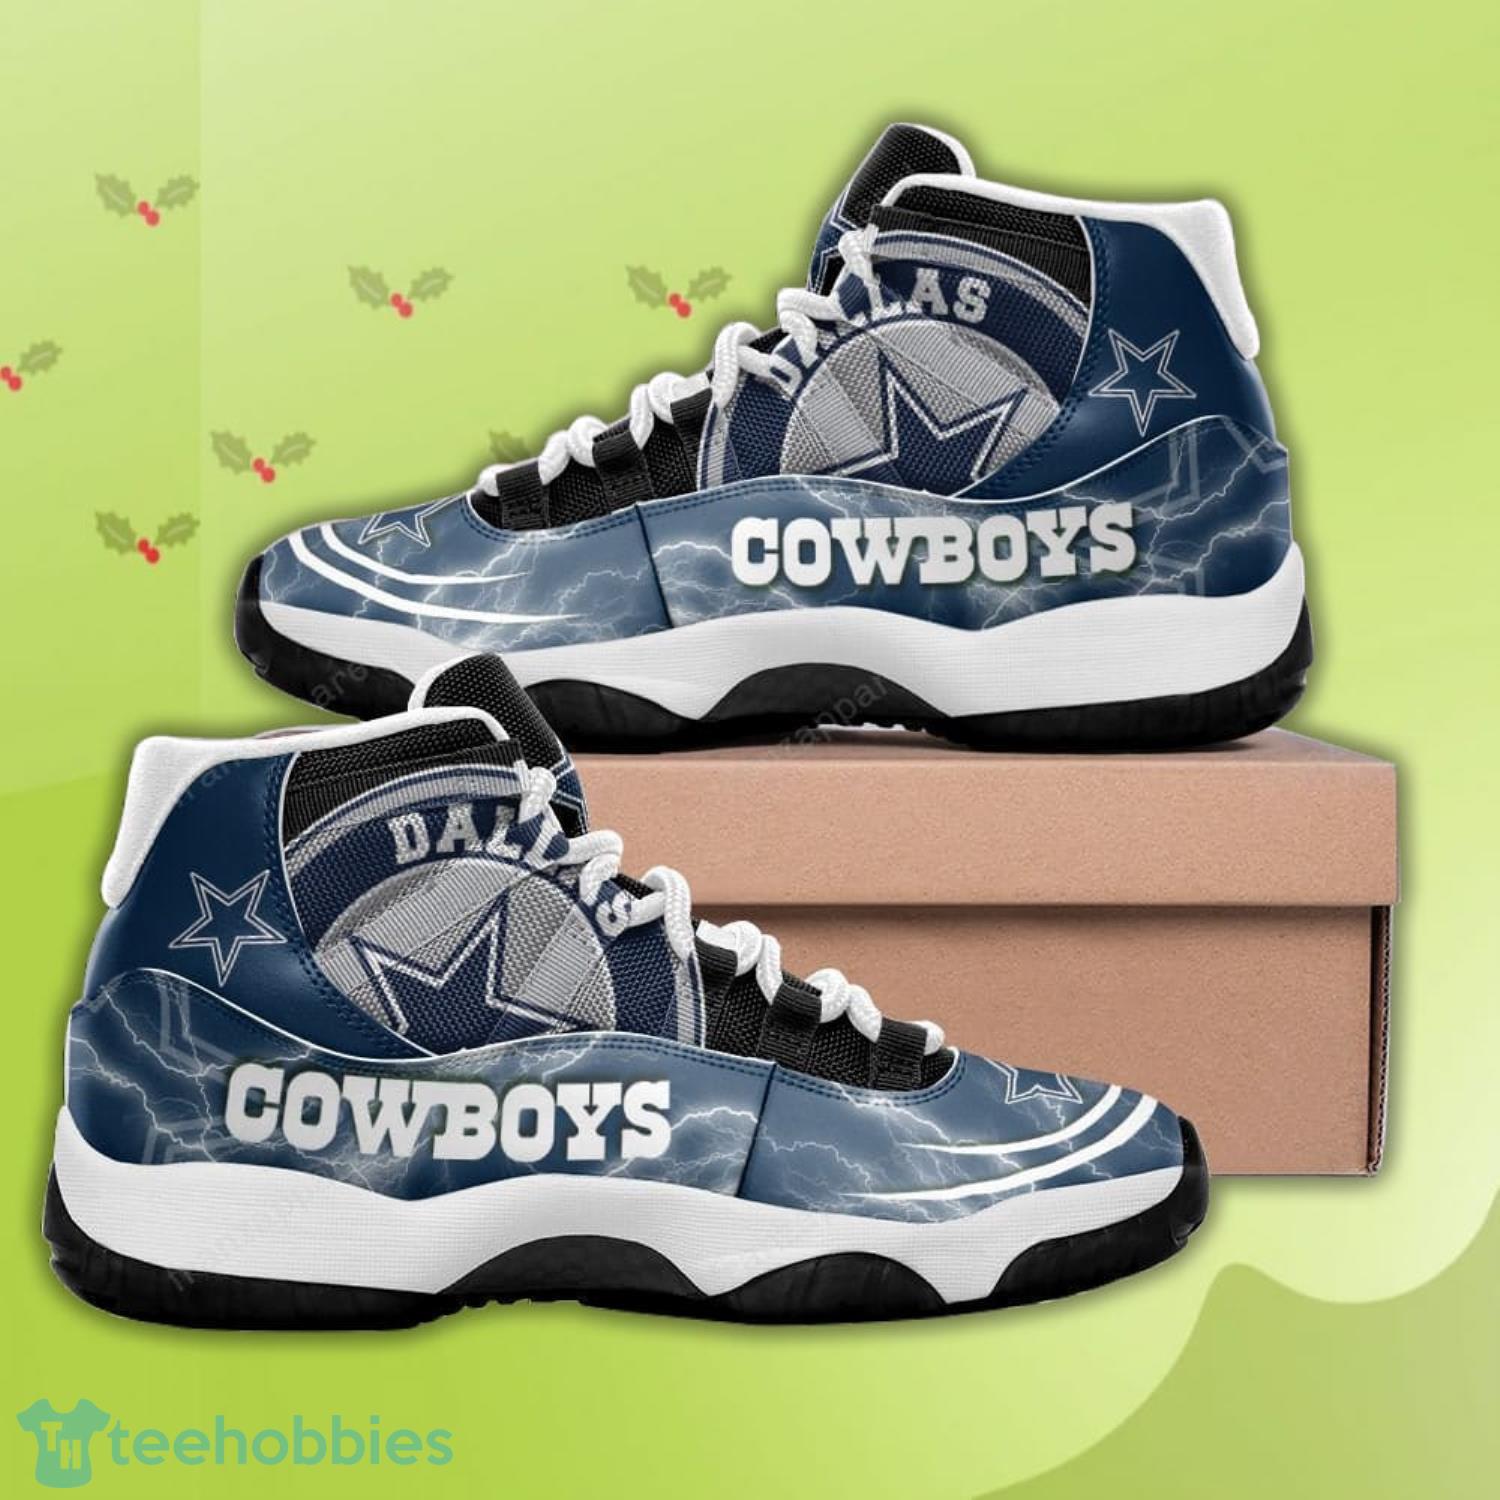 DaIIas Cowboys Team Cool Air Jordan 11 Shoes For Fans Product Photo 1